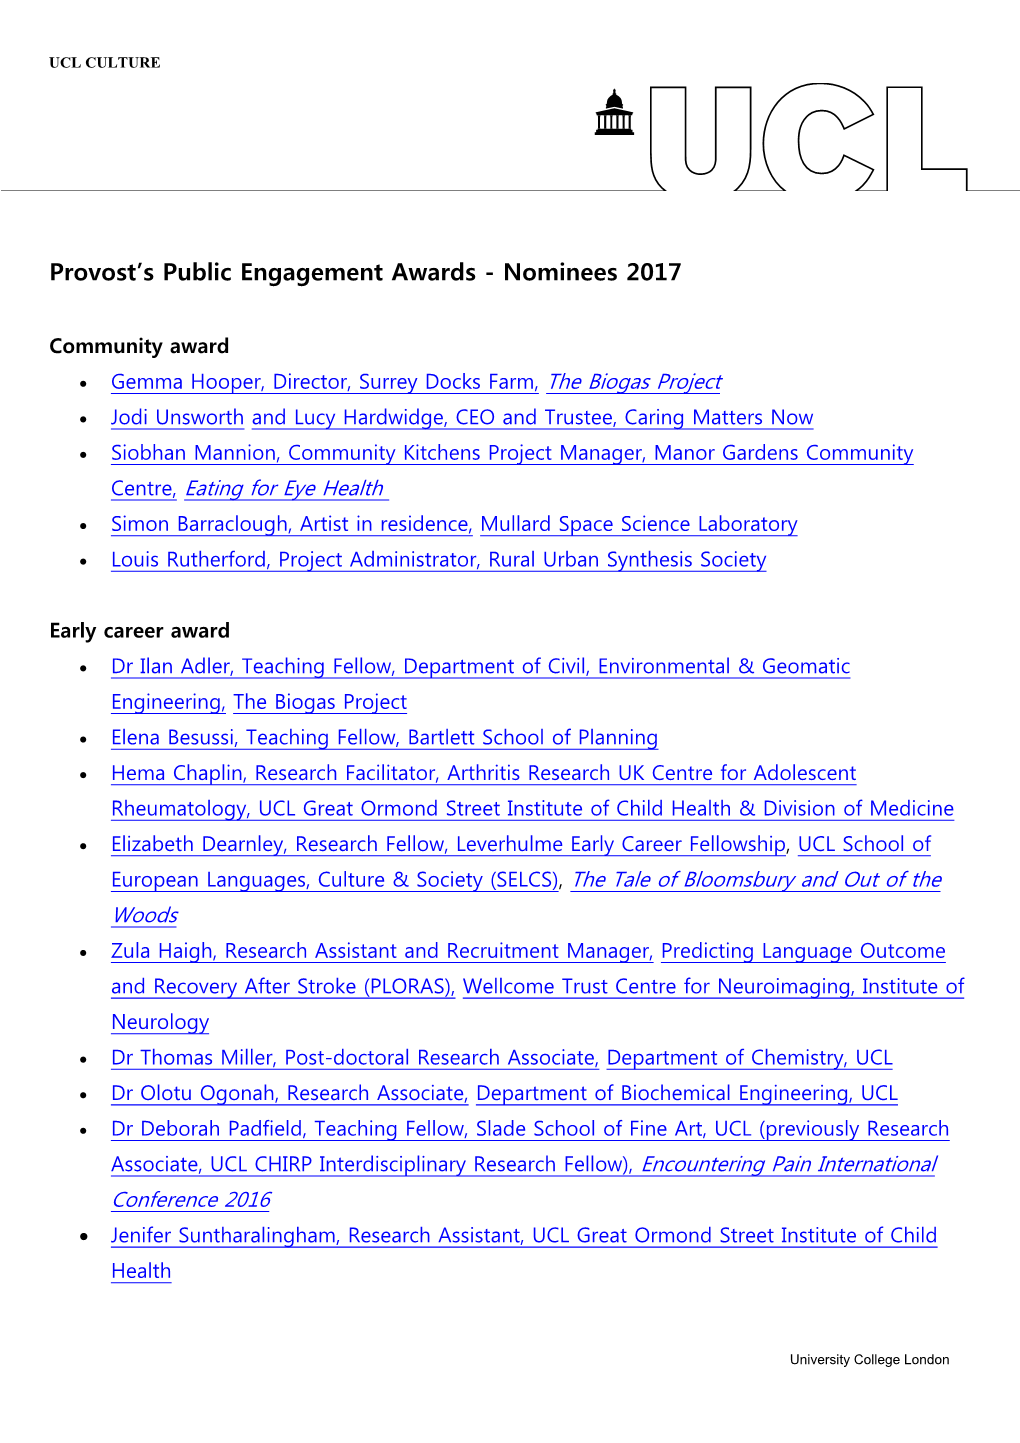 Provost's Public Engagement Awards